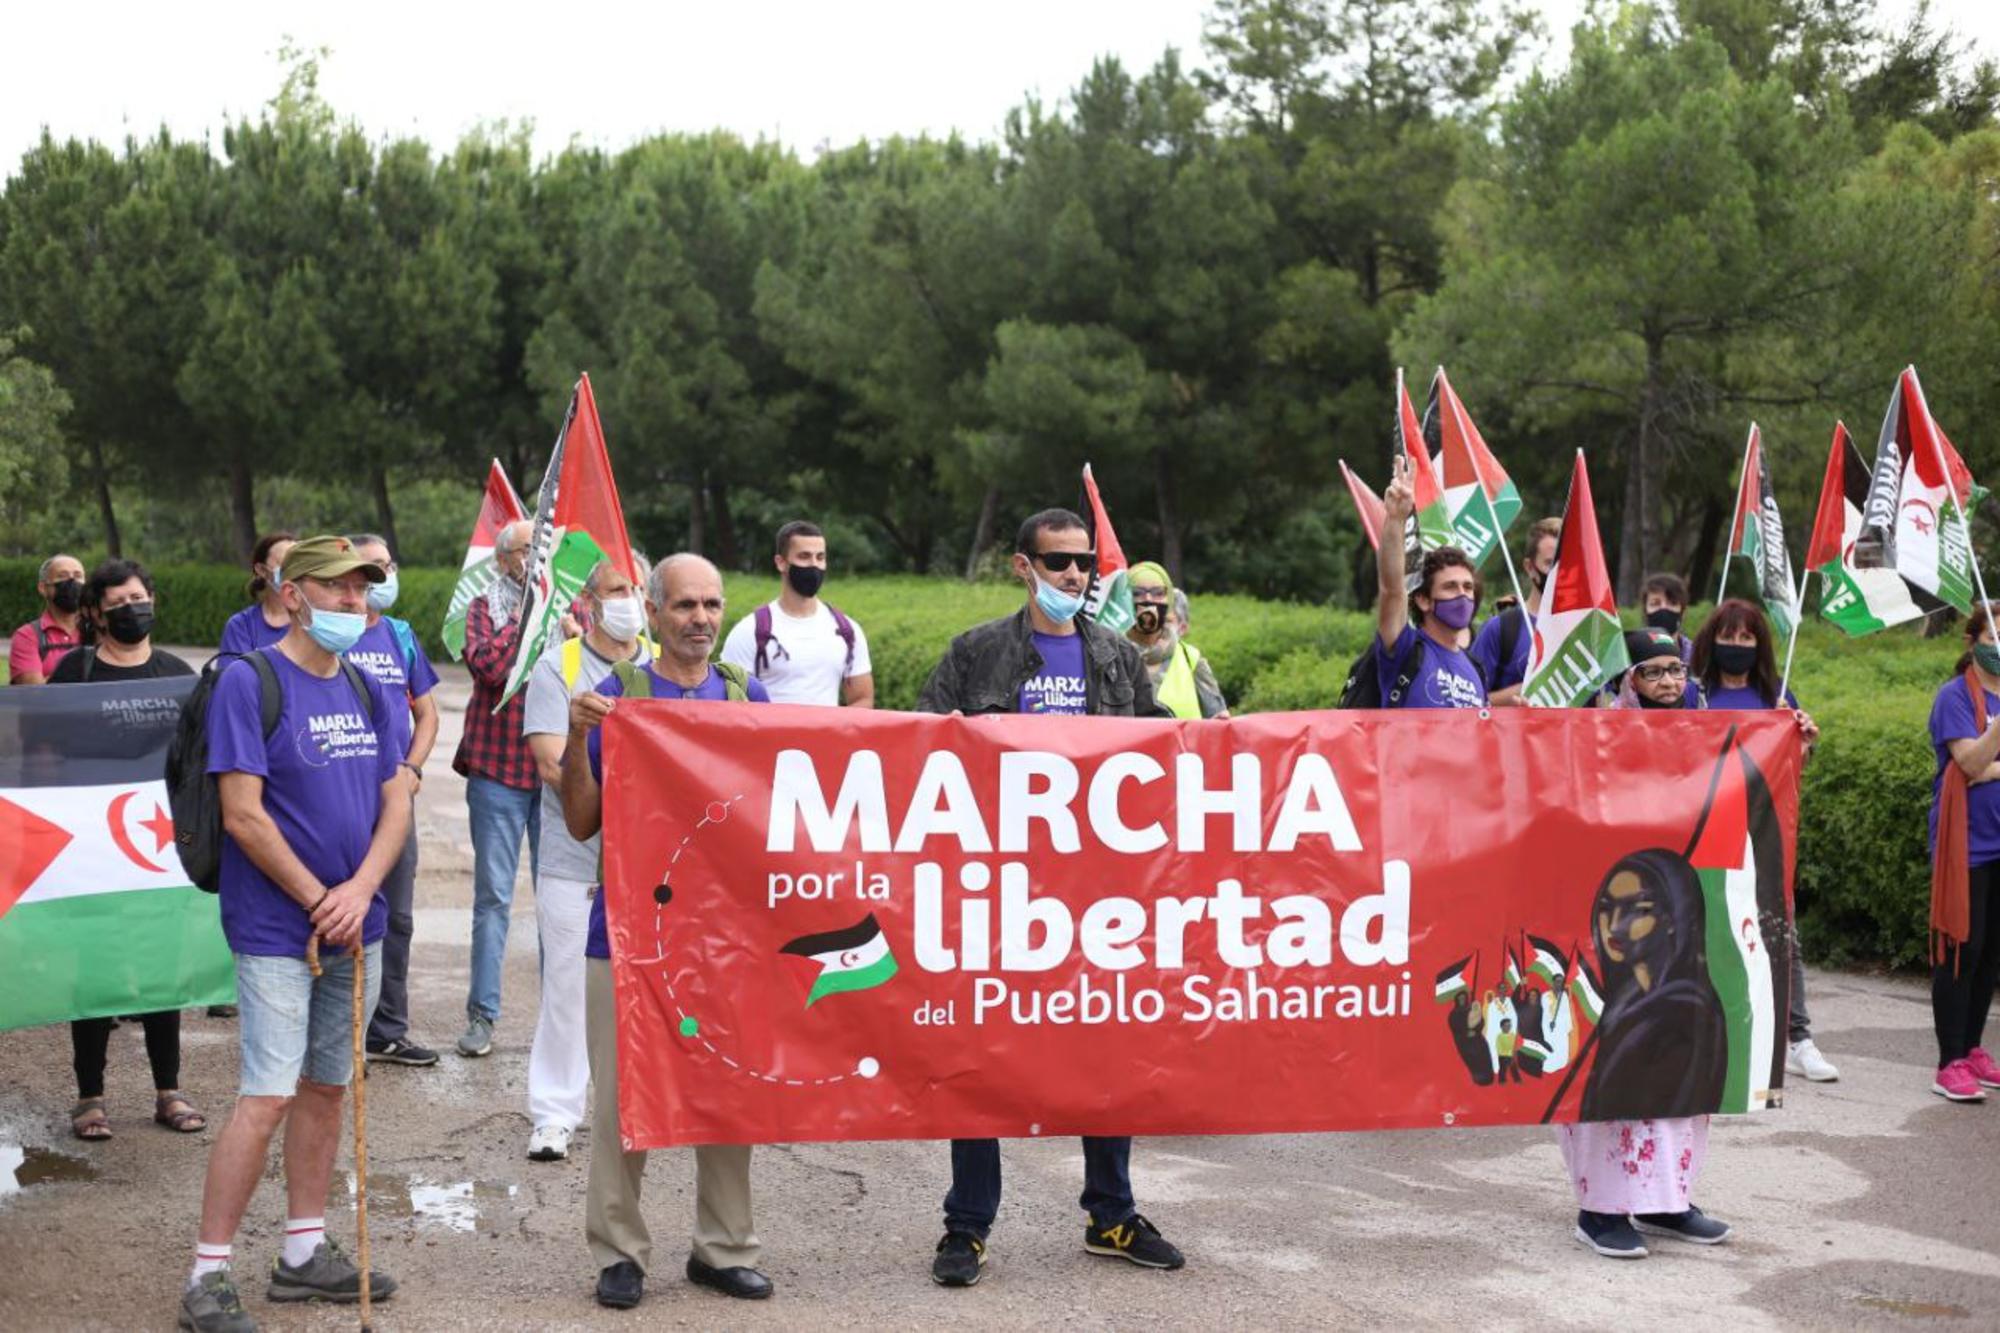 Marcha saharahui País Valencià - 2